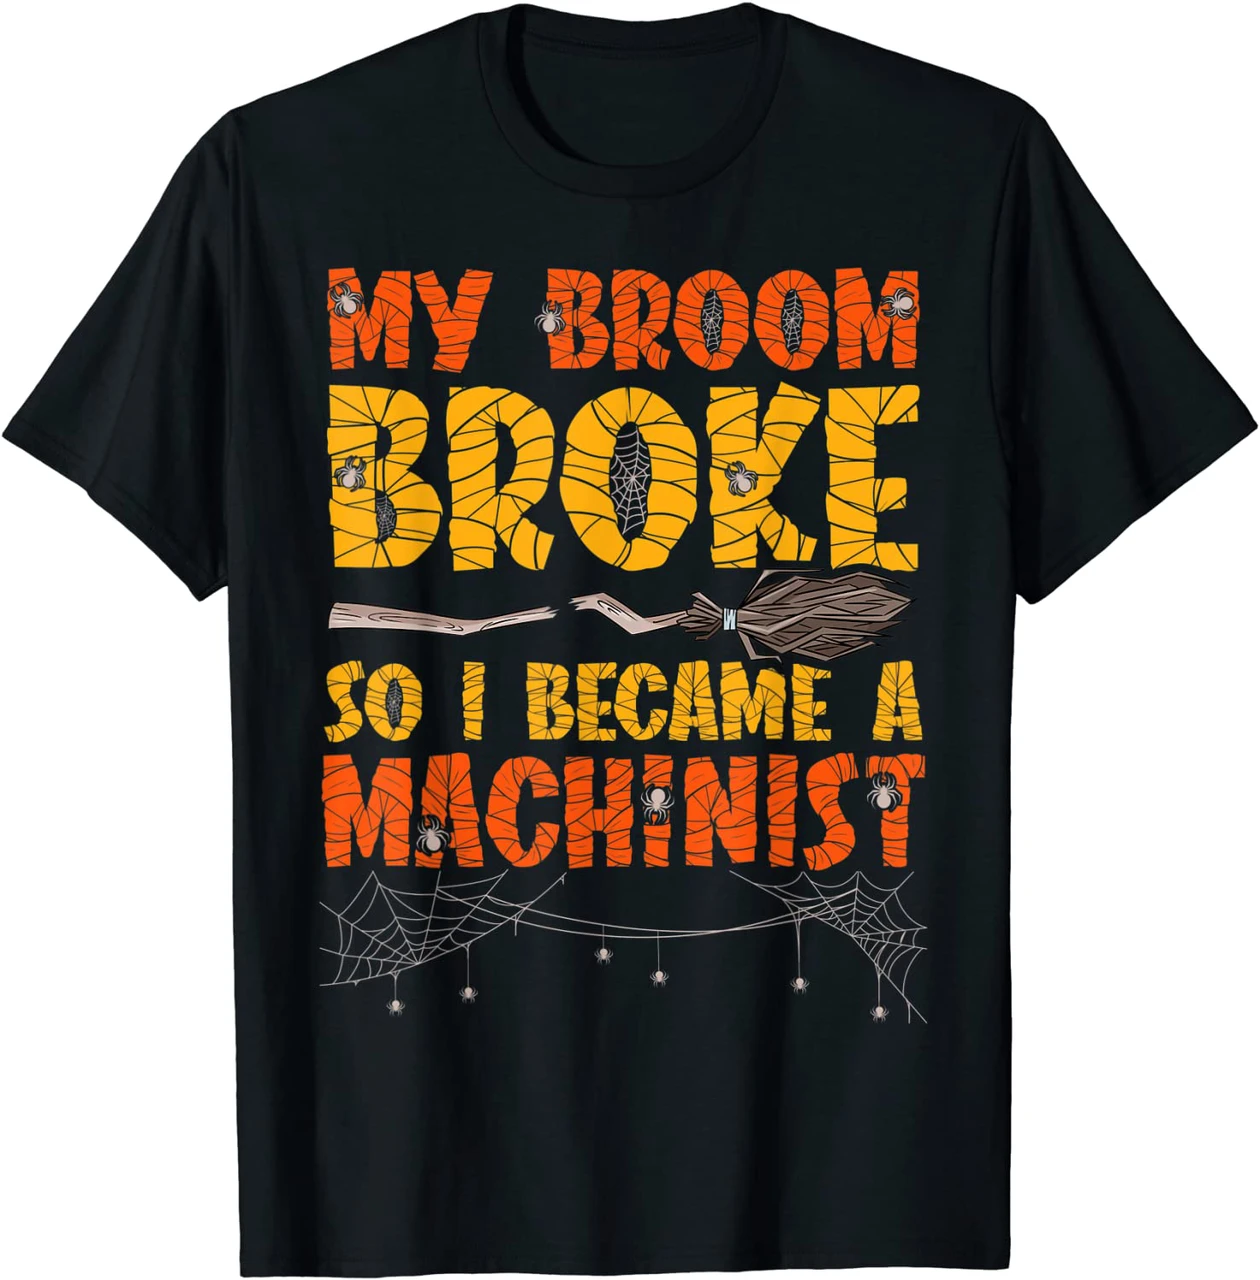 My Broom Broke So I Became A Machinist Shirt